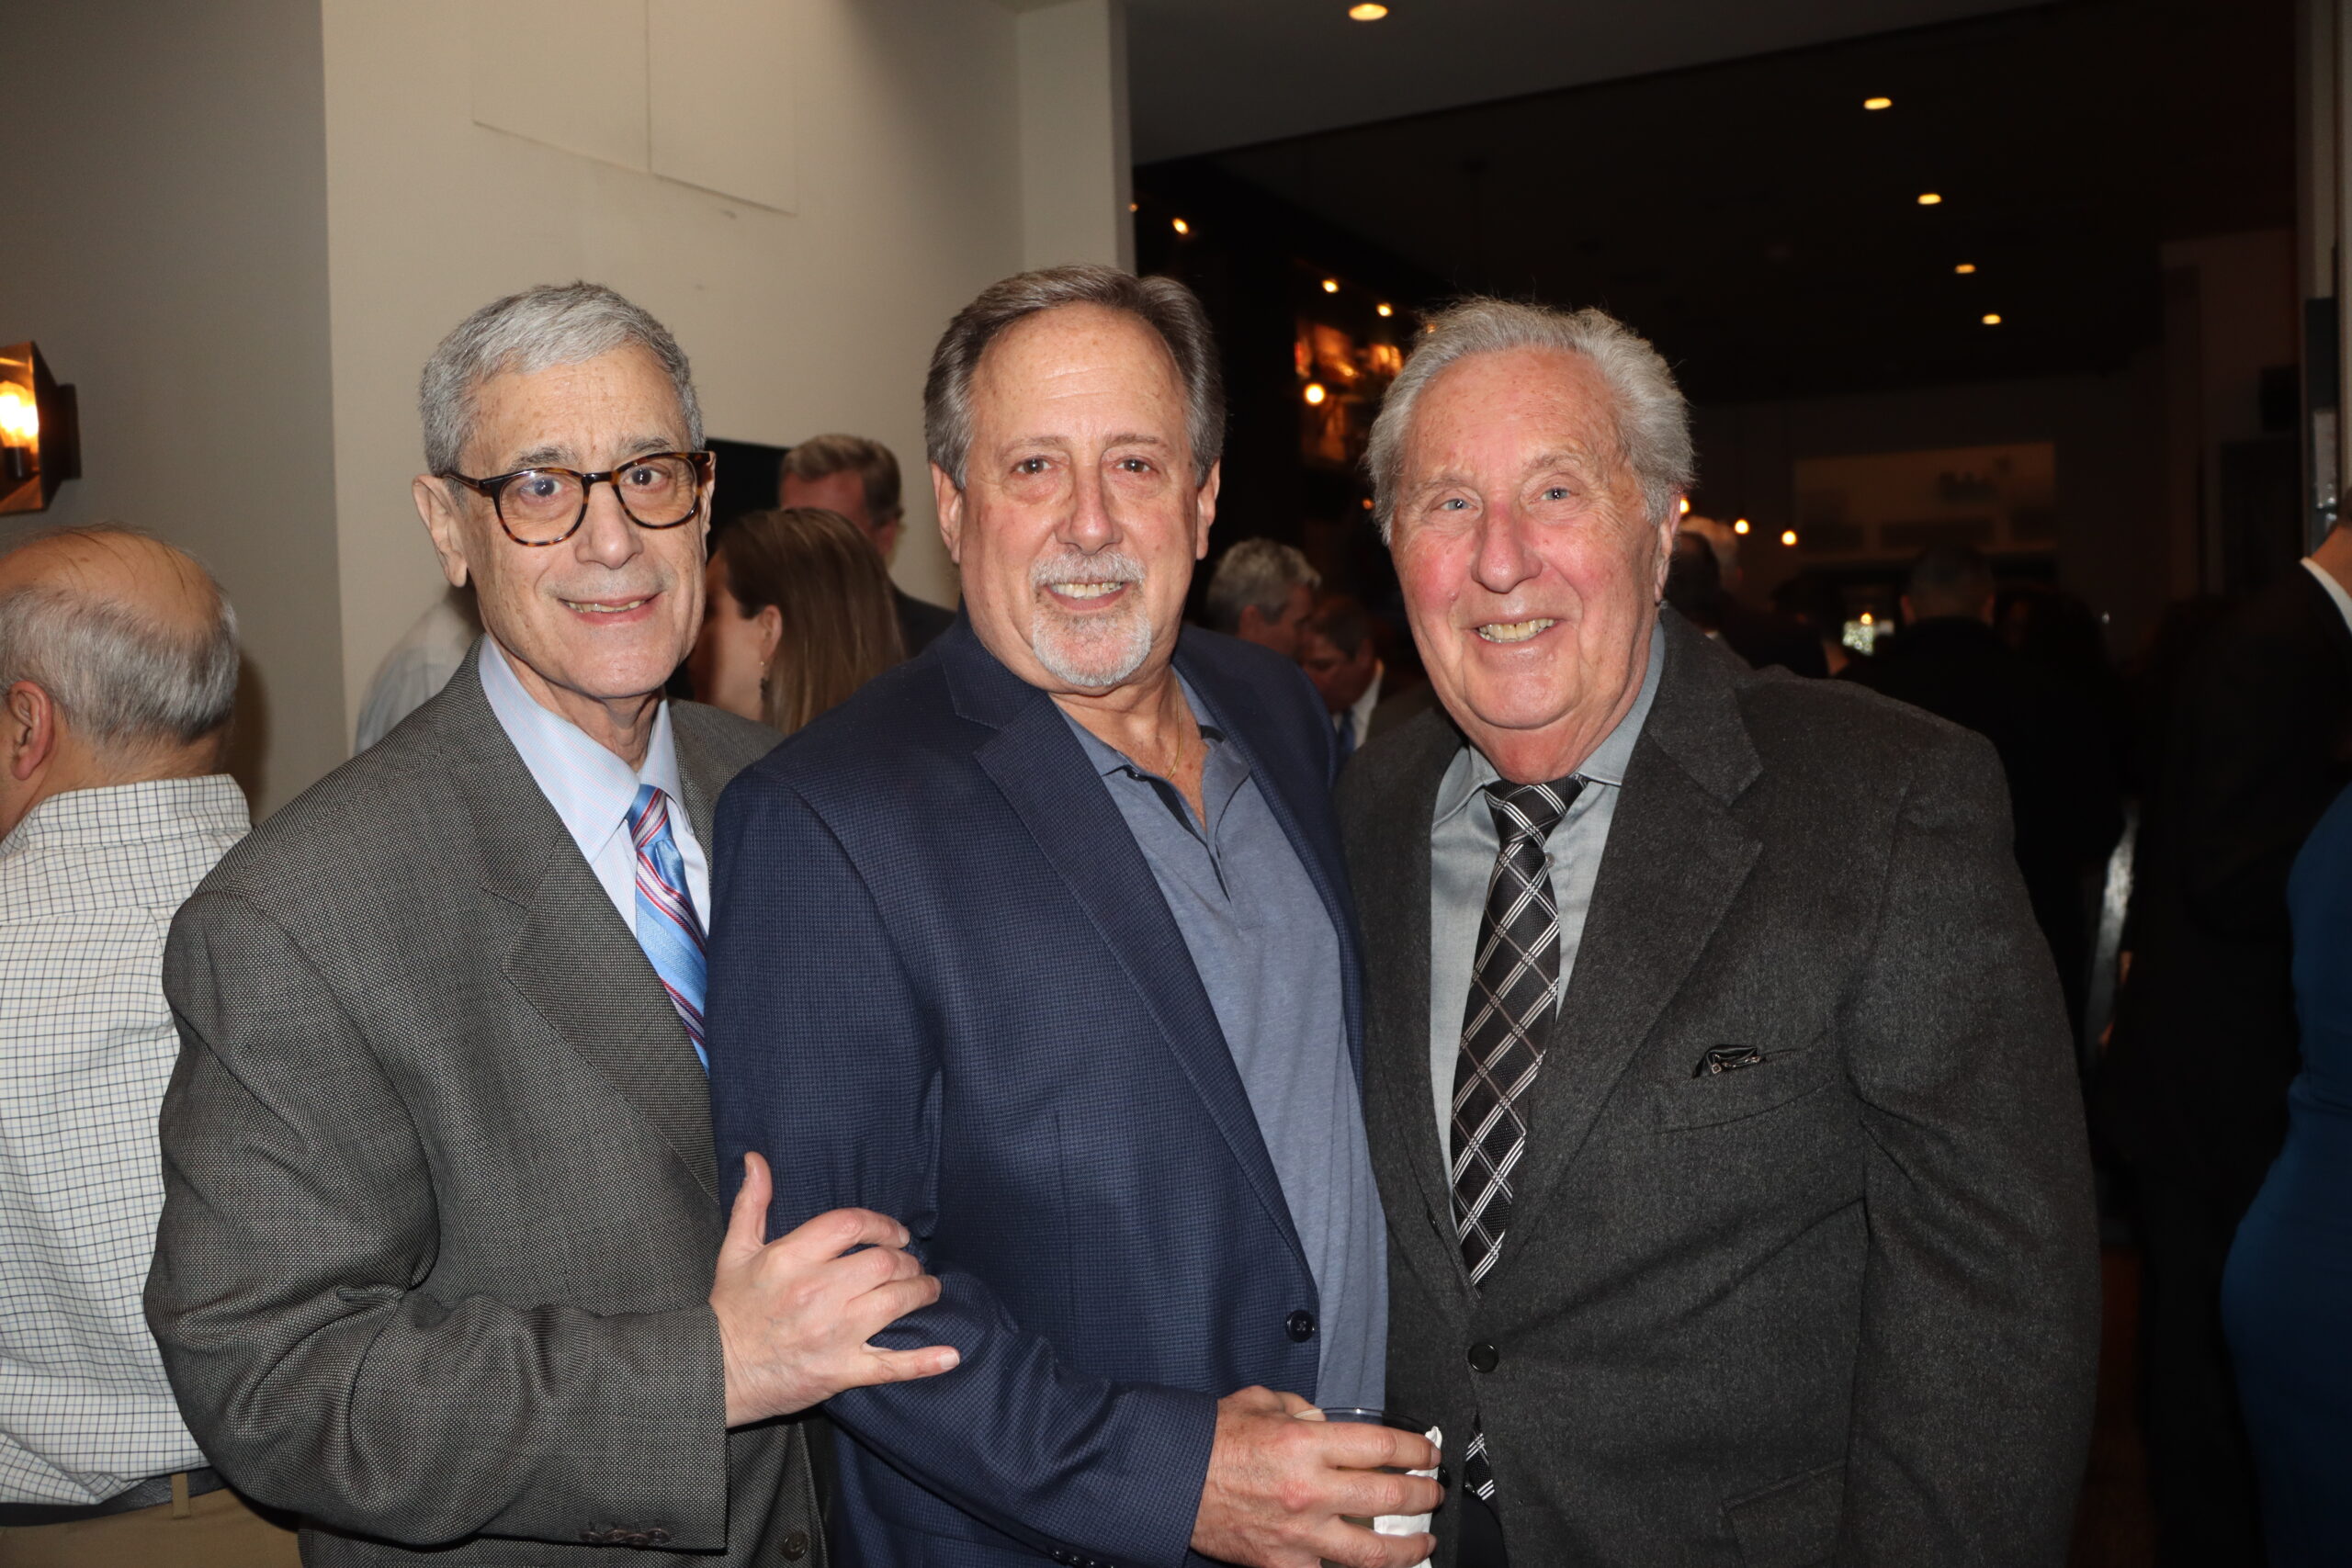 From left: Steve Cohn, Hon. Donald Kurtz, and George Farkas at Kurtz’s retirement party.